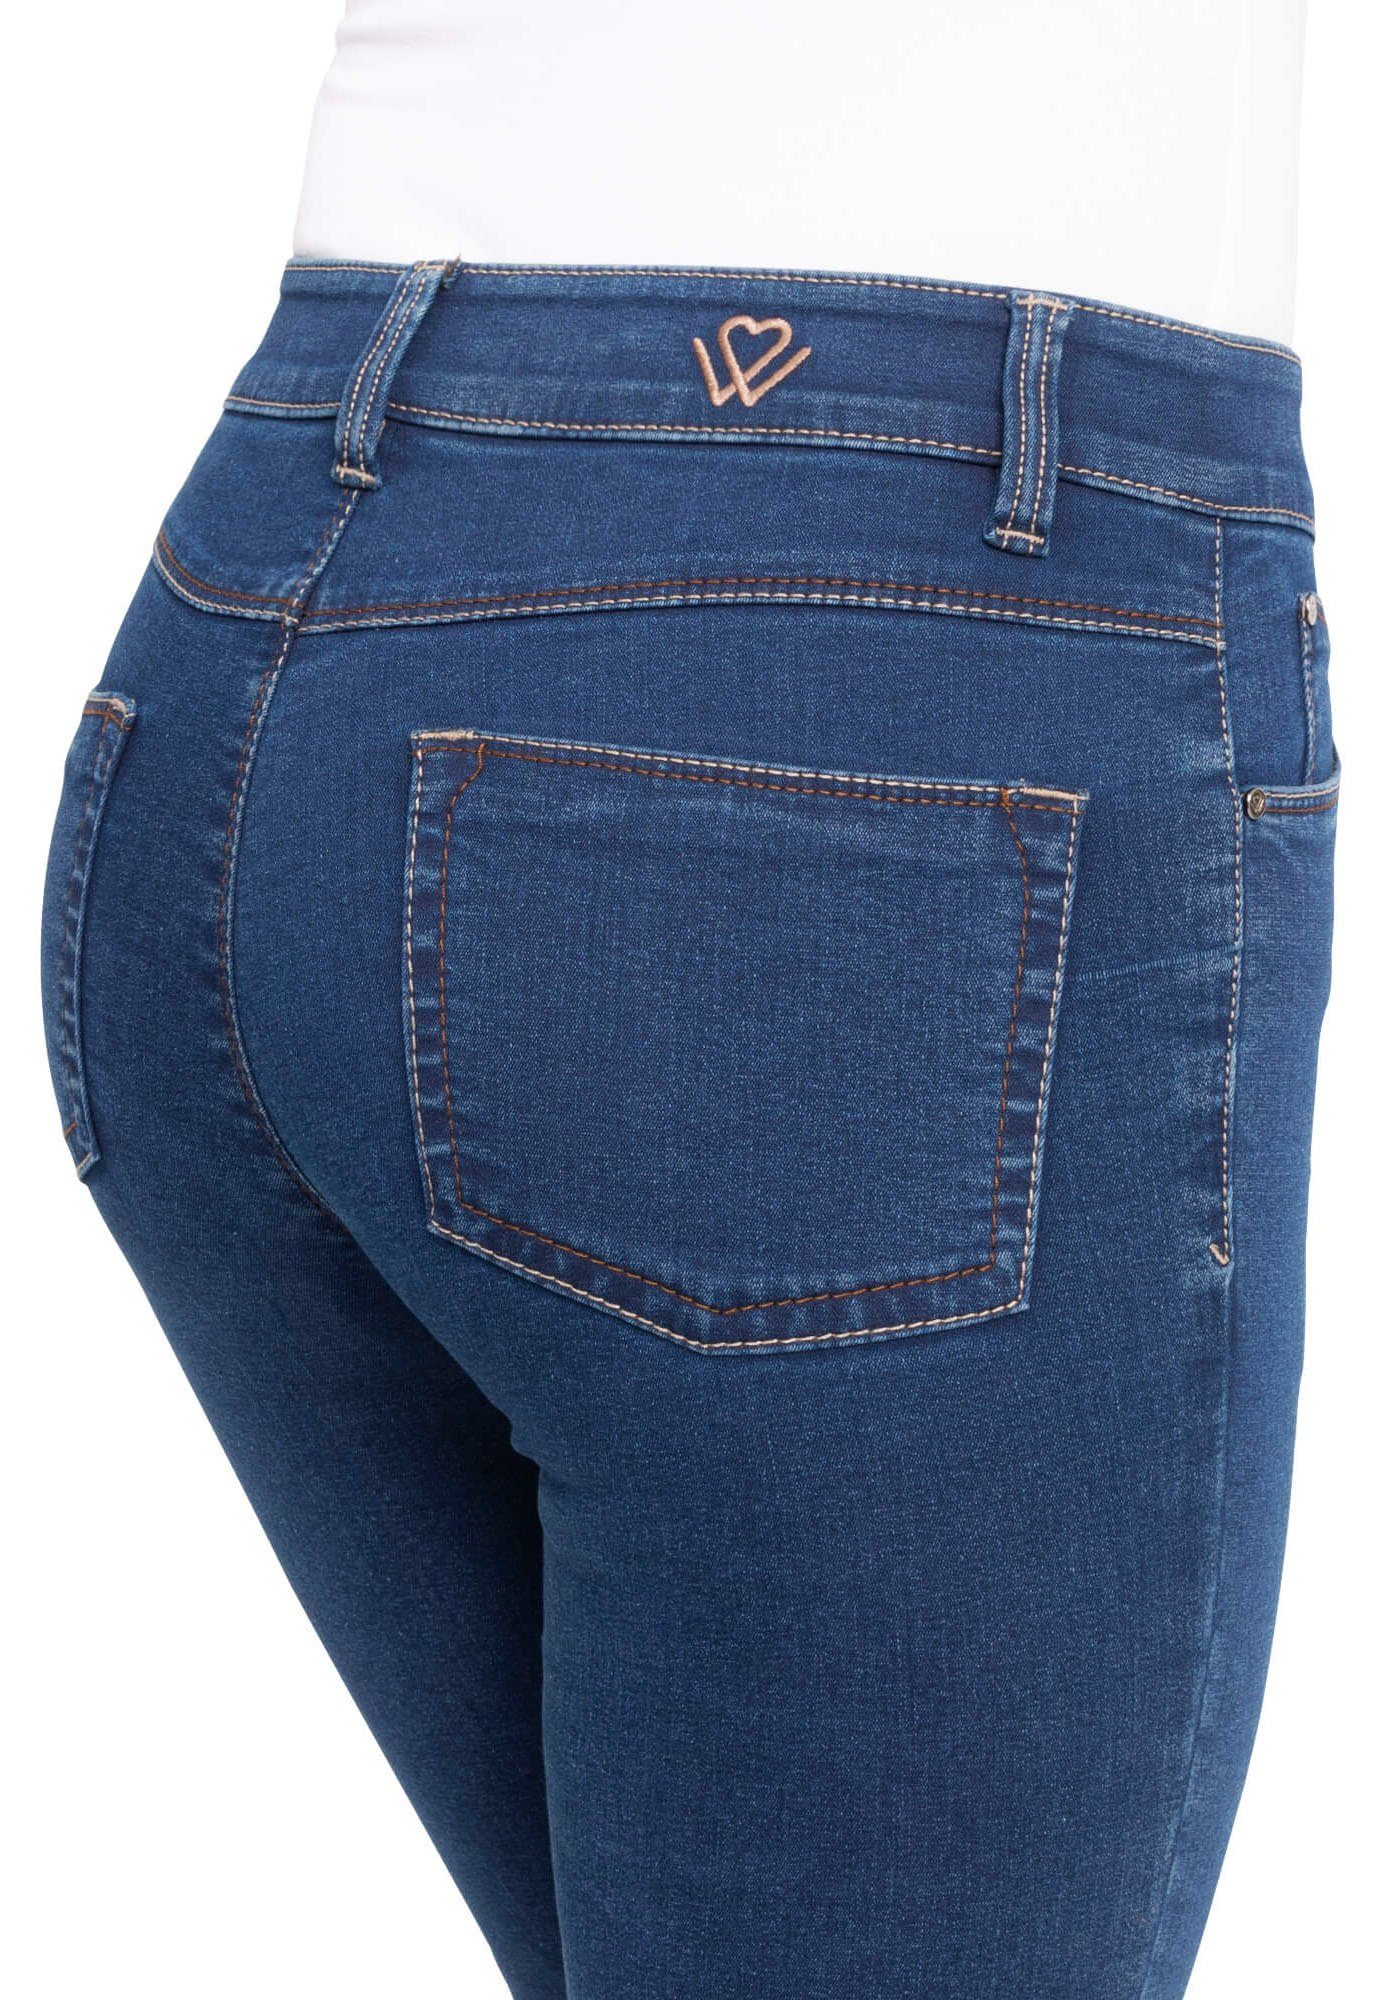 Schnitt Klassischer stone washed gerader Classic-Slim Slim-fit-Jeans blue wonderjeans